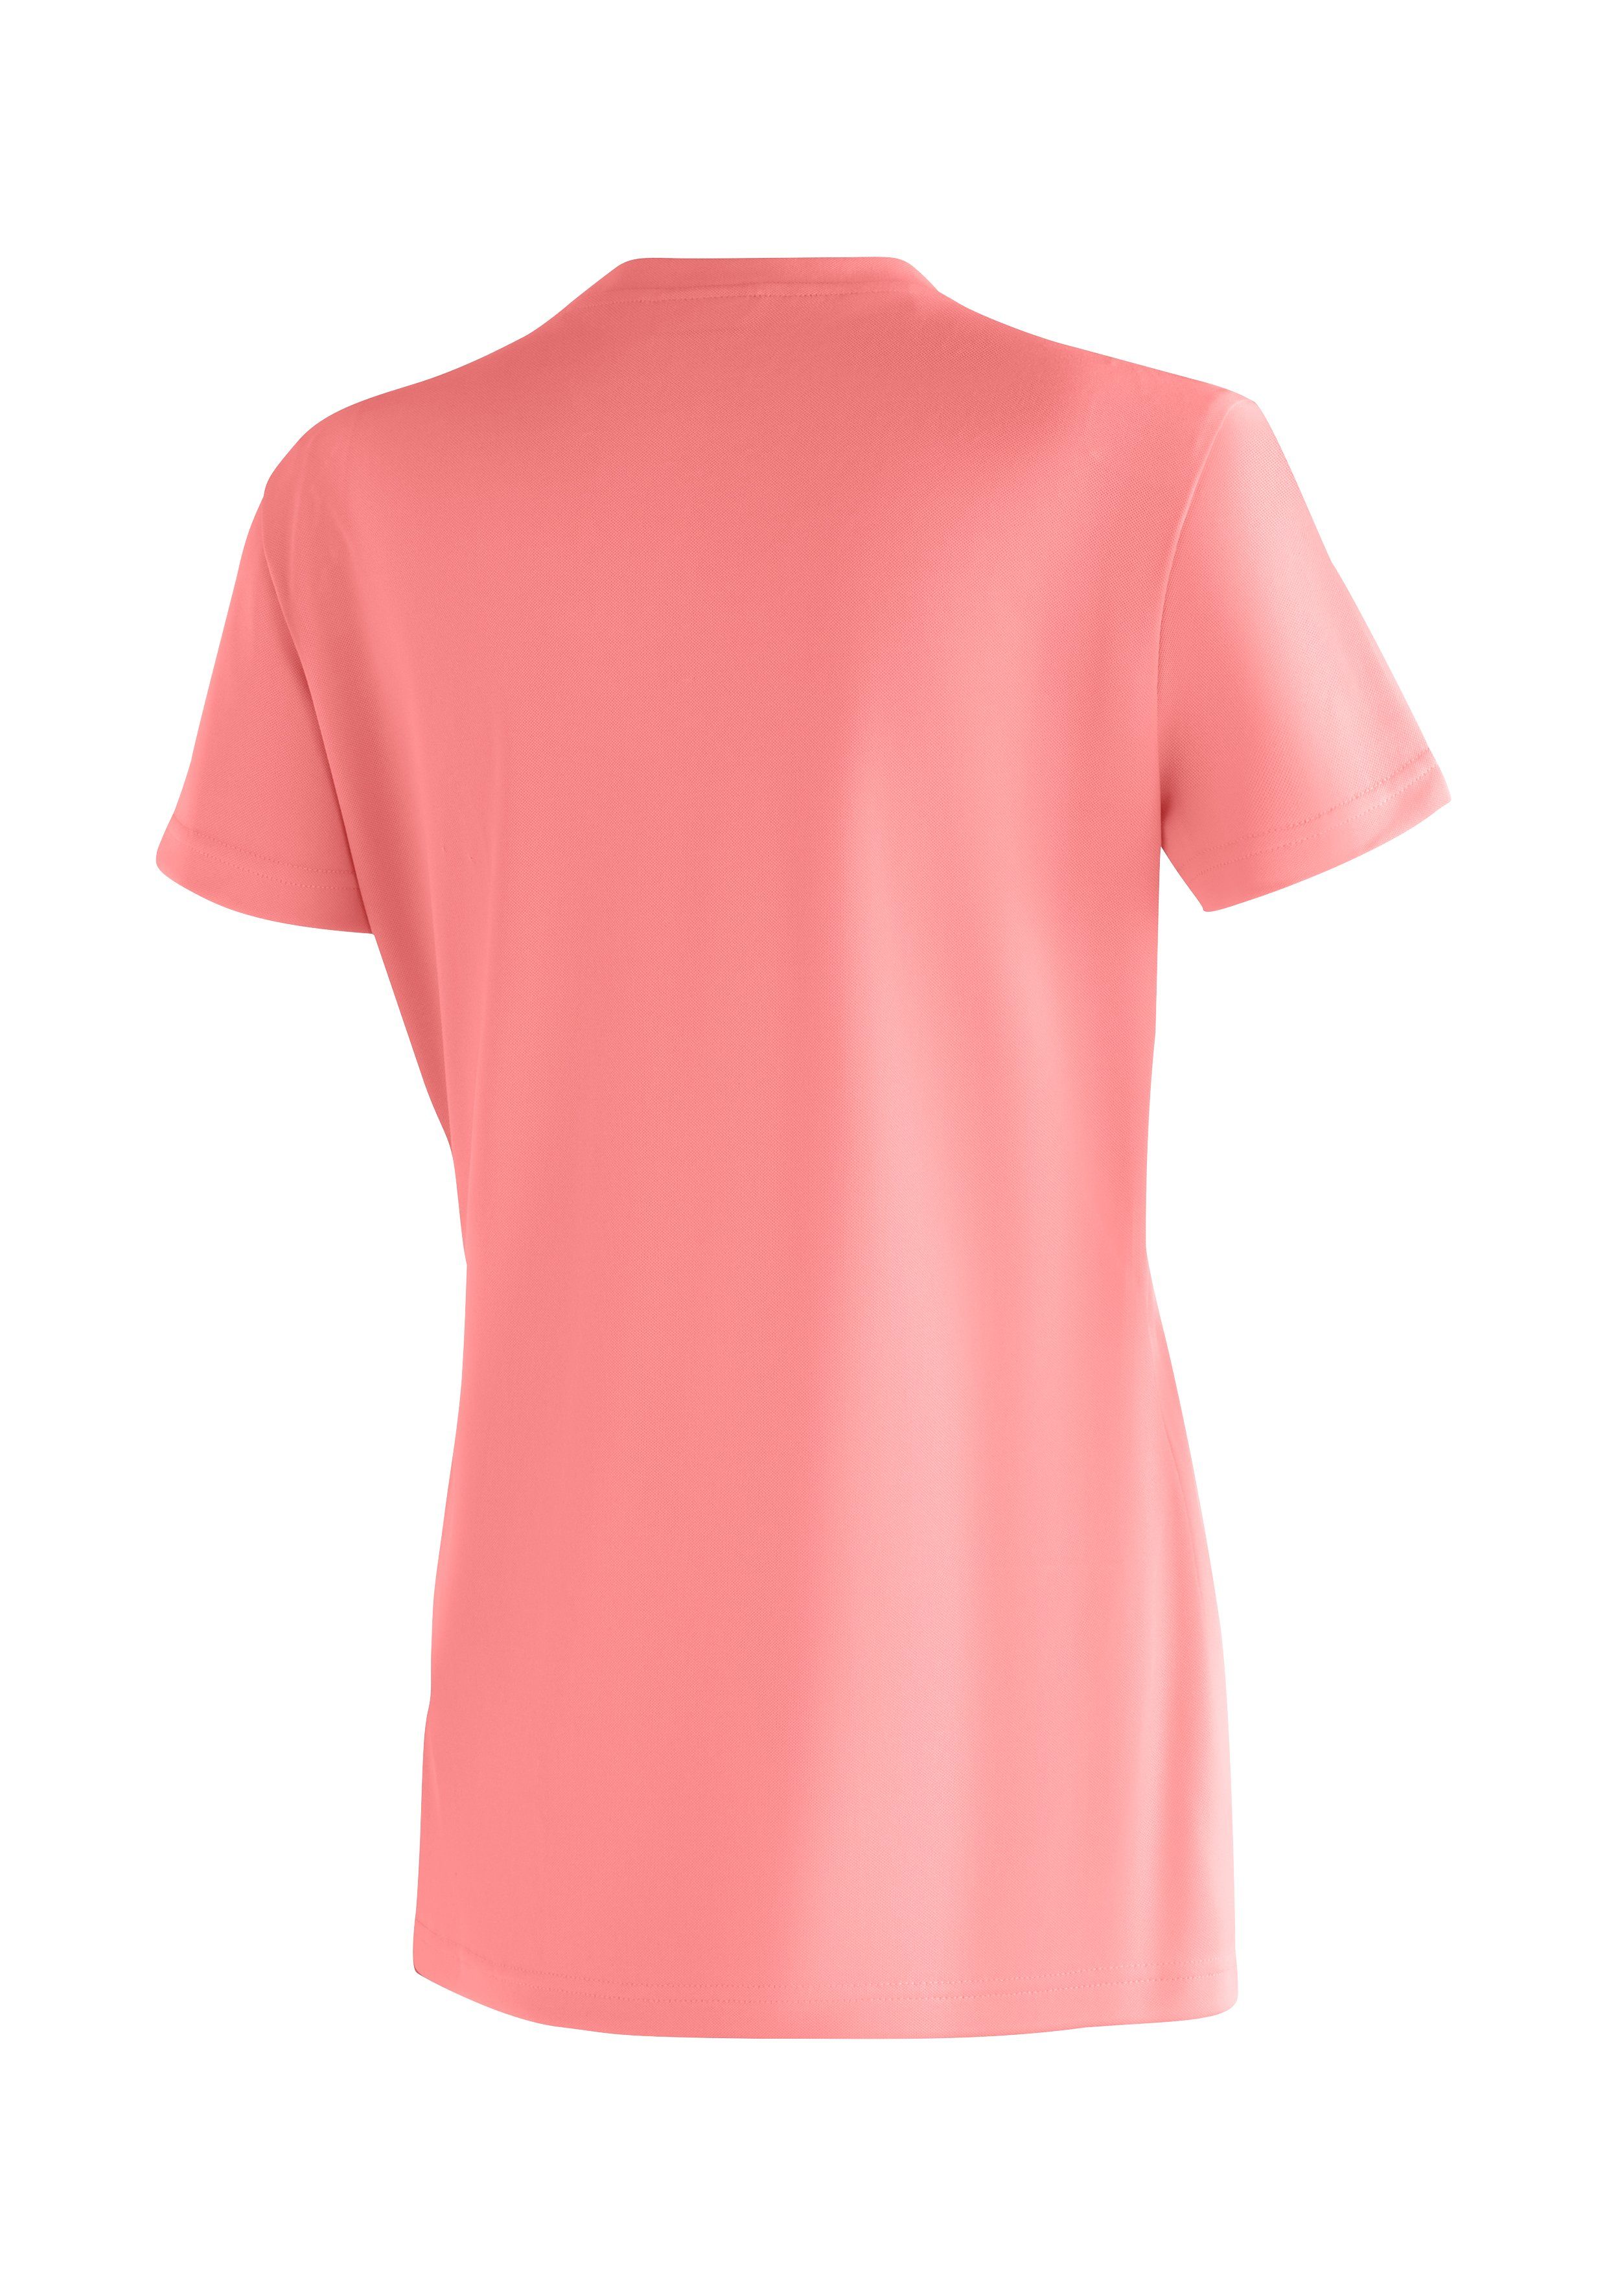 Print Passformstabilität Funktional hoher Waltraut T-Shirt Maier Funktionsshirt Sports perlrosa vielseitiges mit